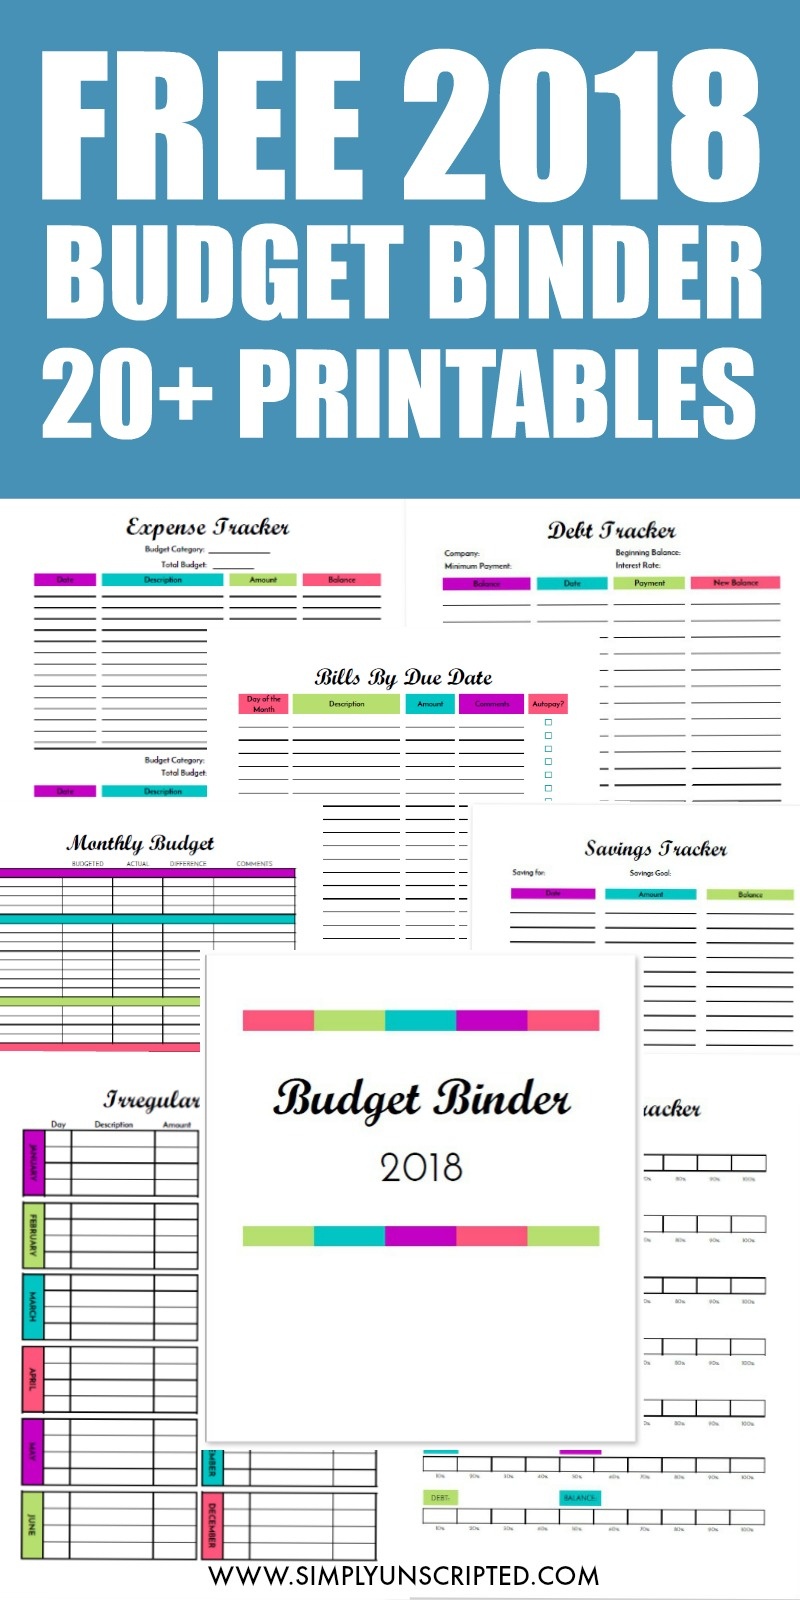 Free 2018 Budget Binder Printables - Simply Unscripted - Budget Binder Printables 2018 Free